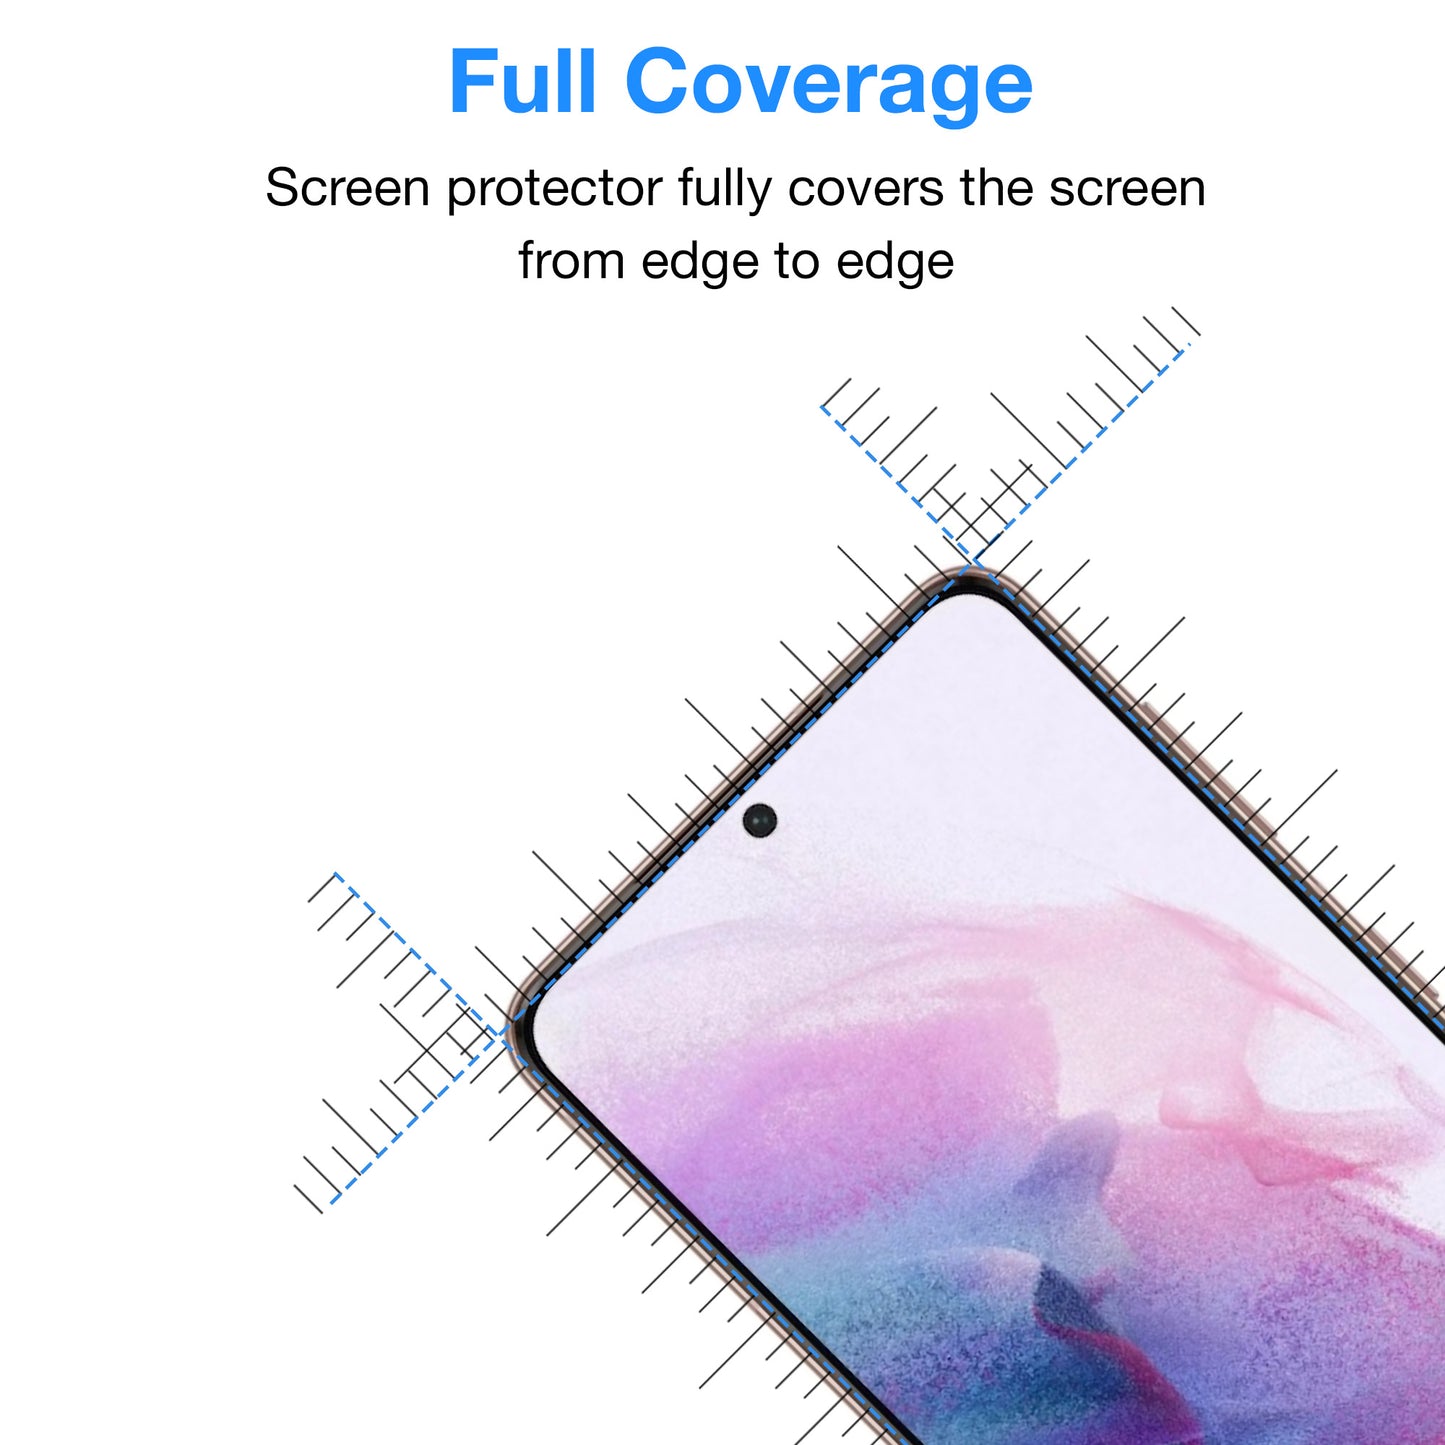 [3 Pack] MEZON Samsung Galaxy S22+ 5G Premium Hydrogel Clear Edge-to-Edge Full Coverage Screen Protector Fingerprint Sensor Film